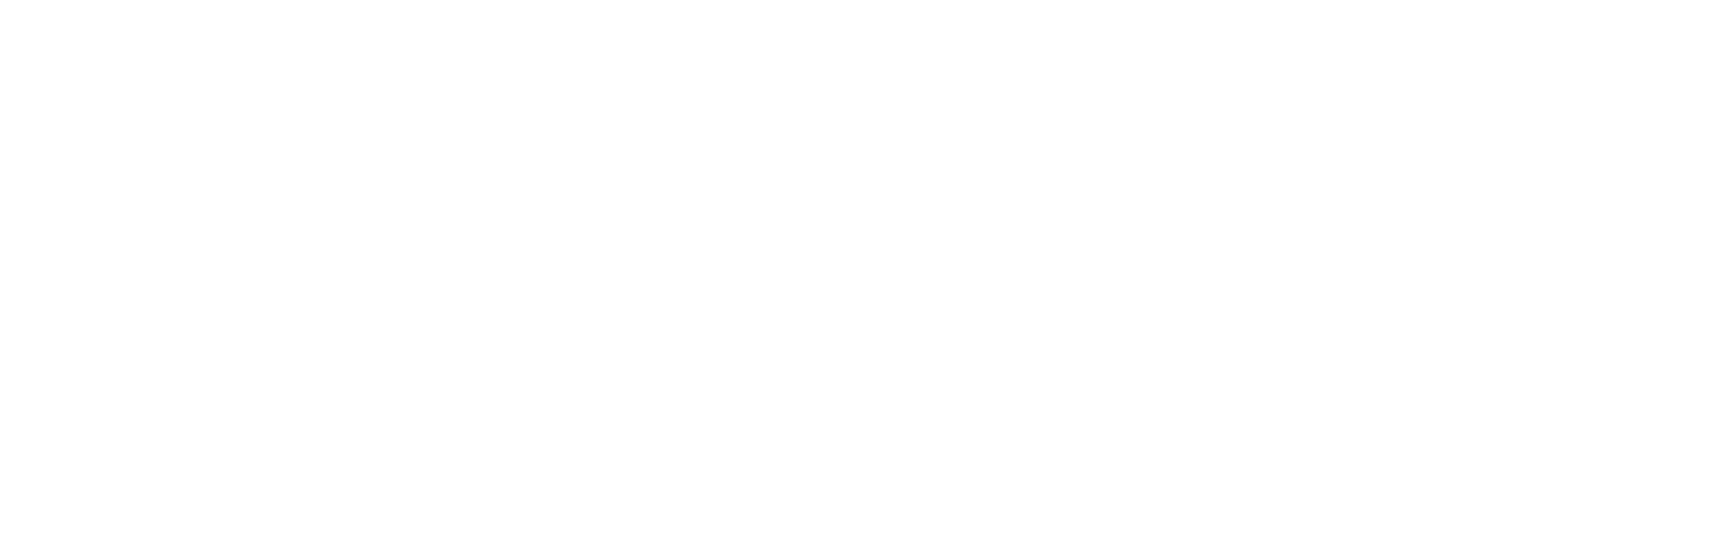 mijin logo white color